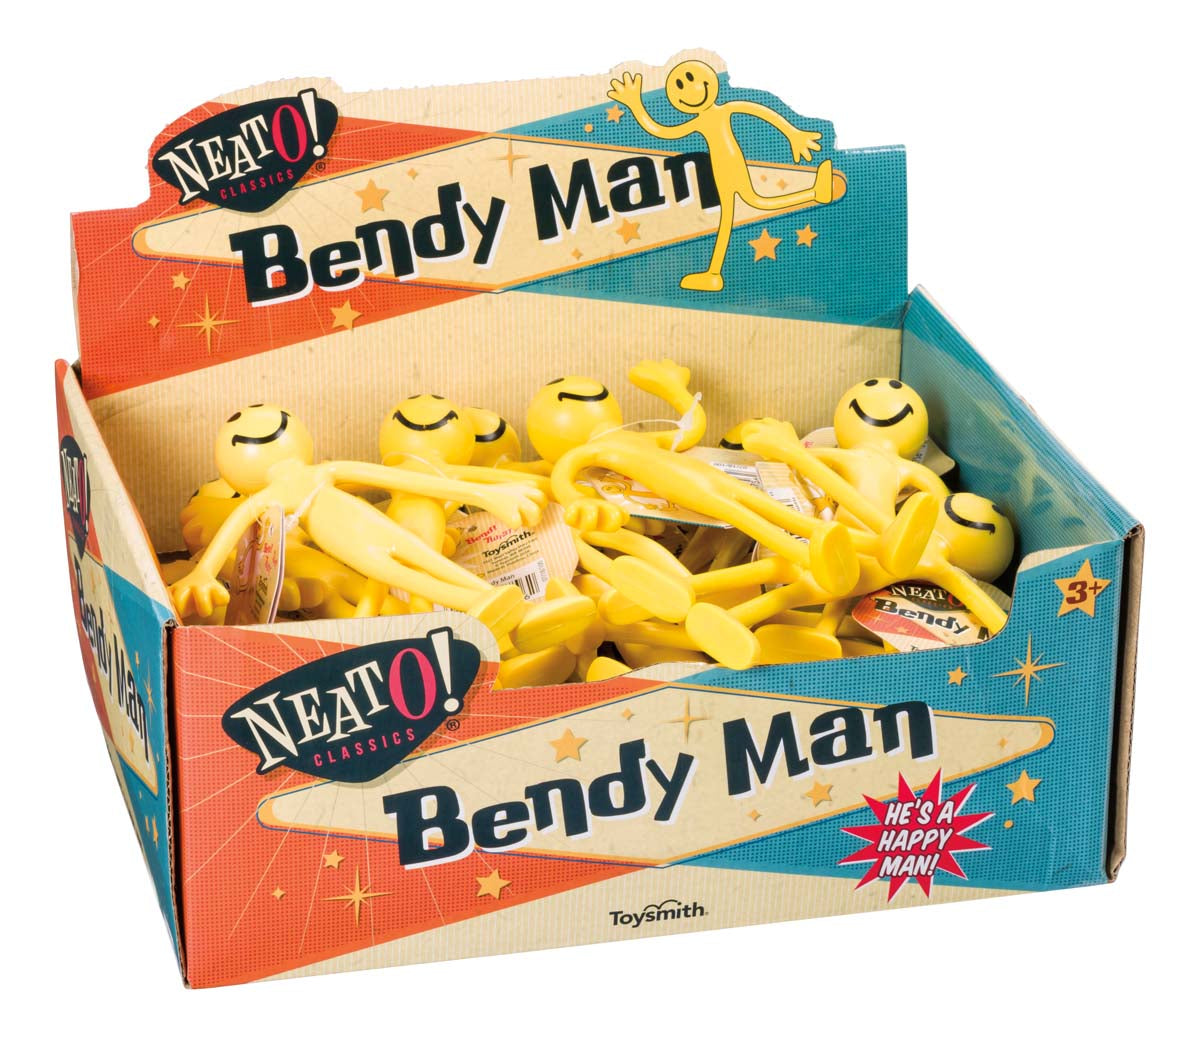 Neato! Bendy Man